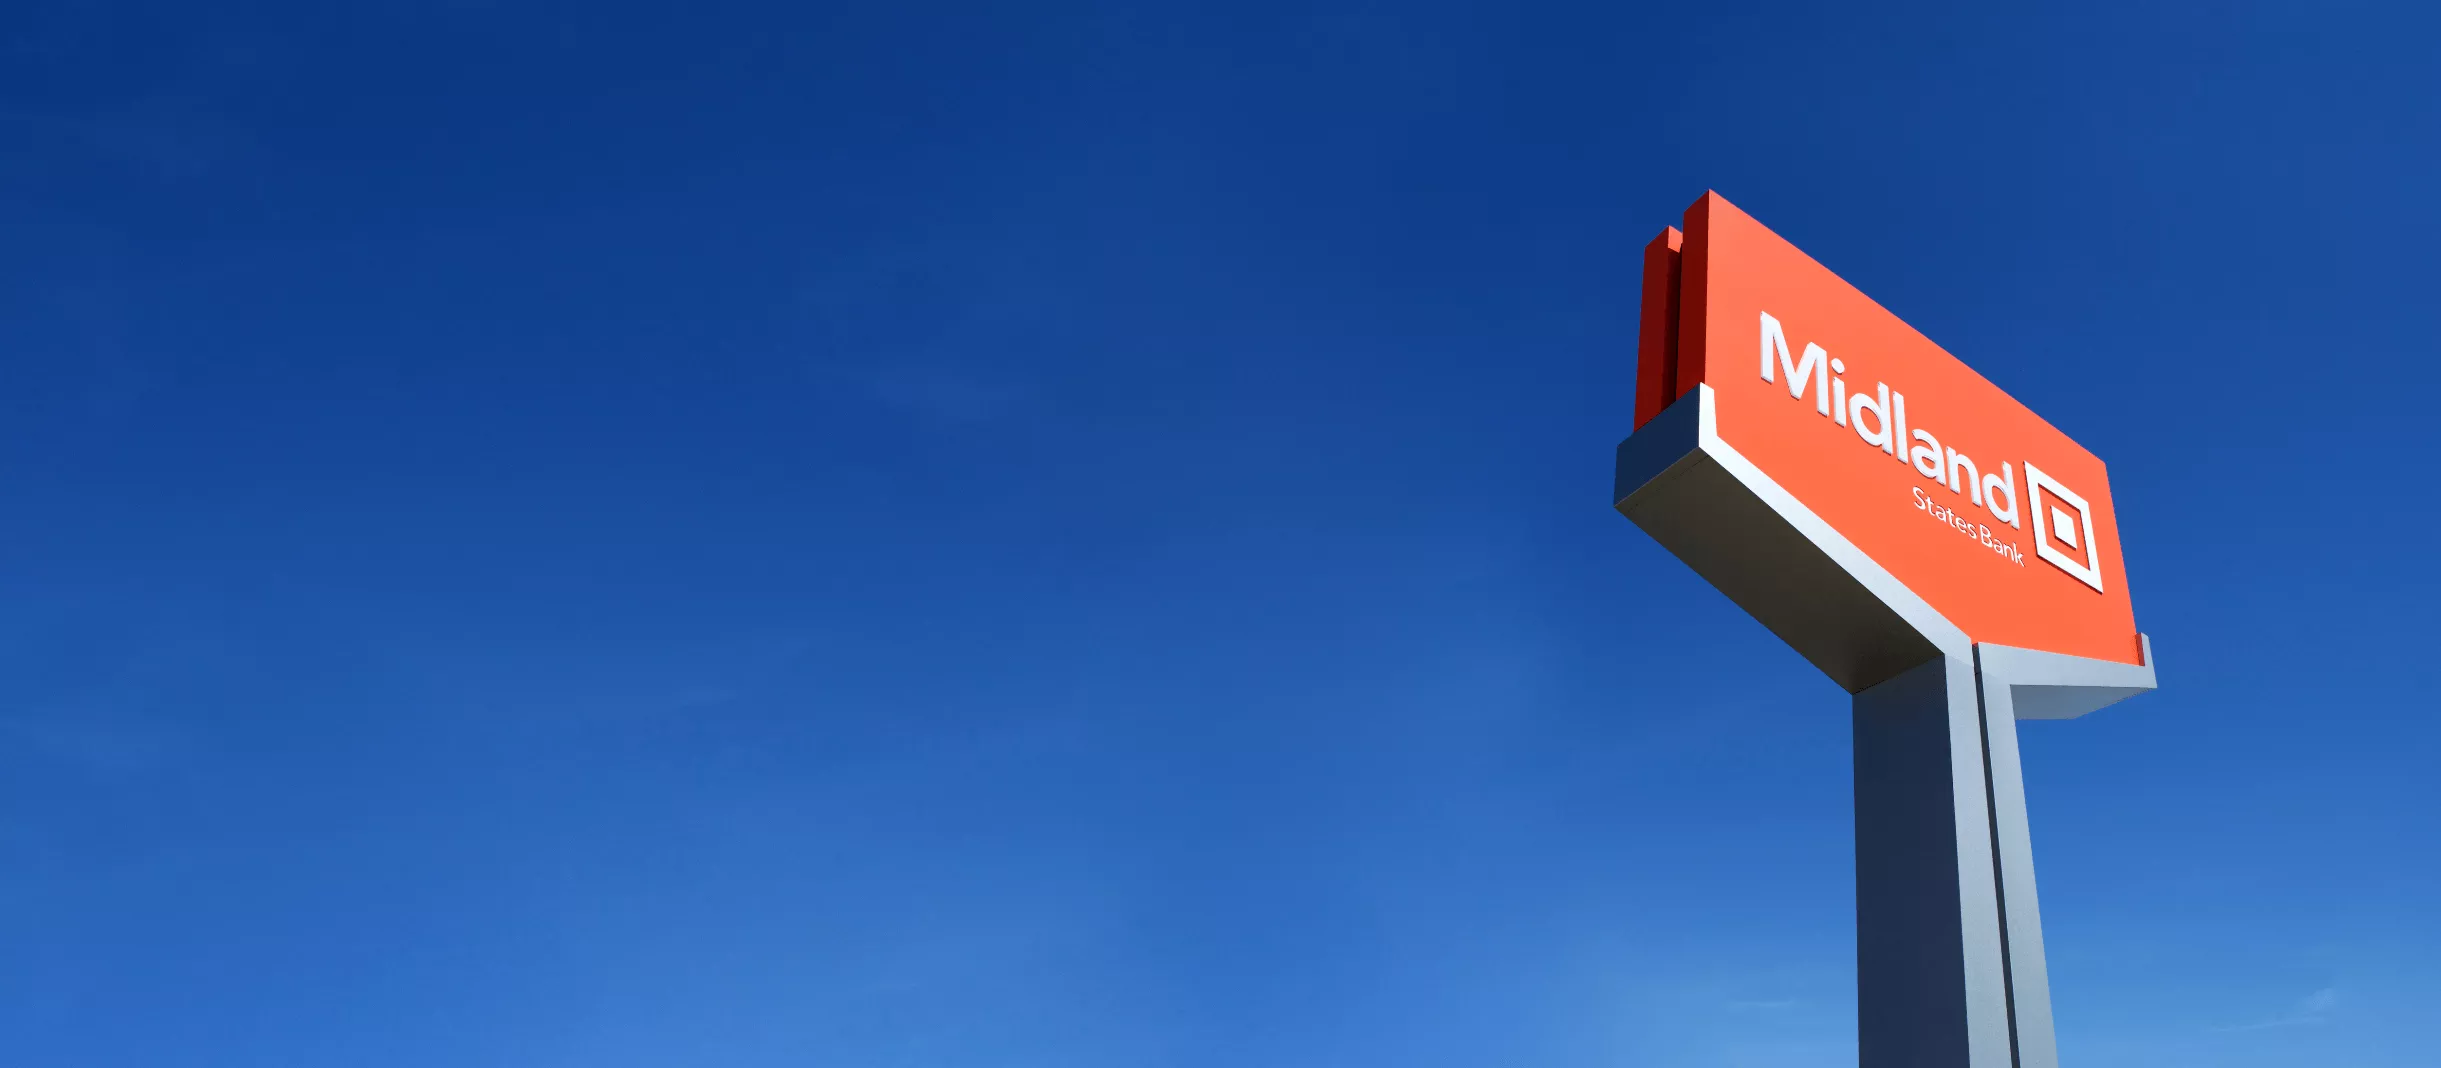 midland bank sign on blue sky